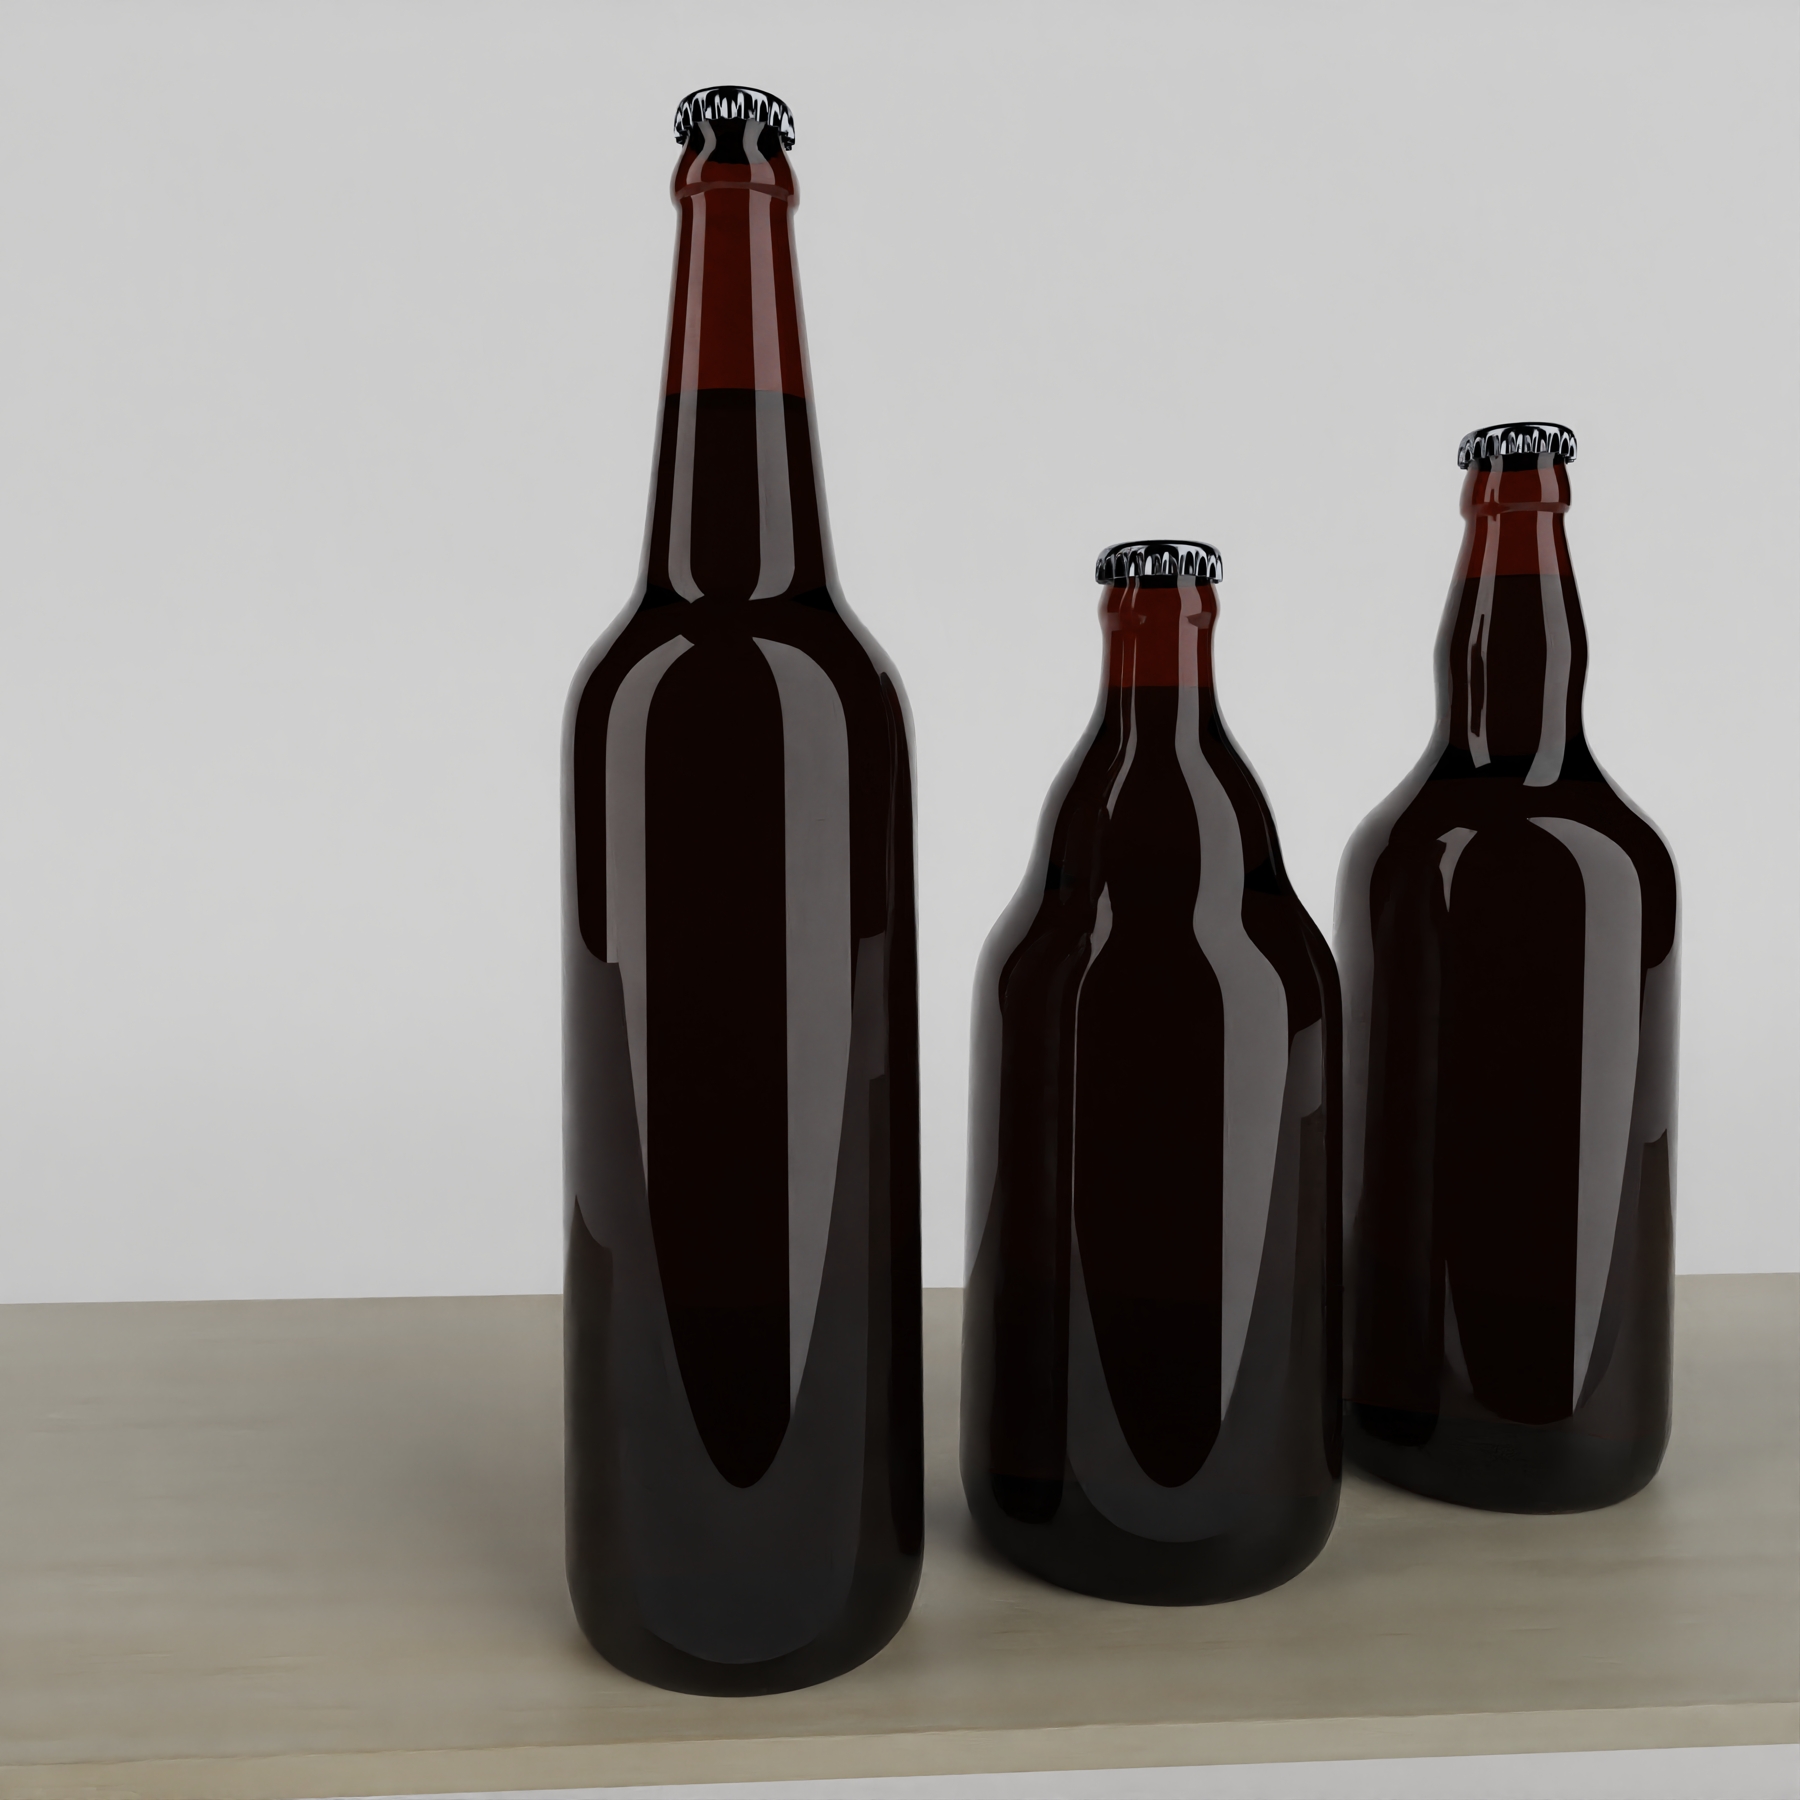 Bottles-3-Brown-Beer_Scene 1.jpg